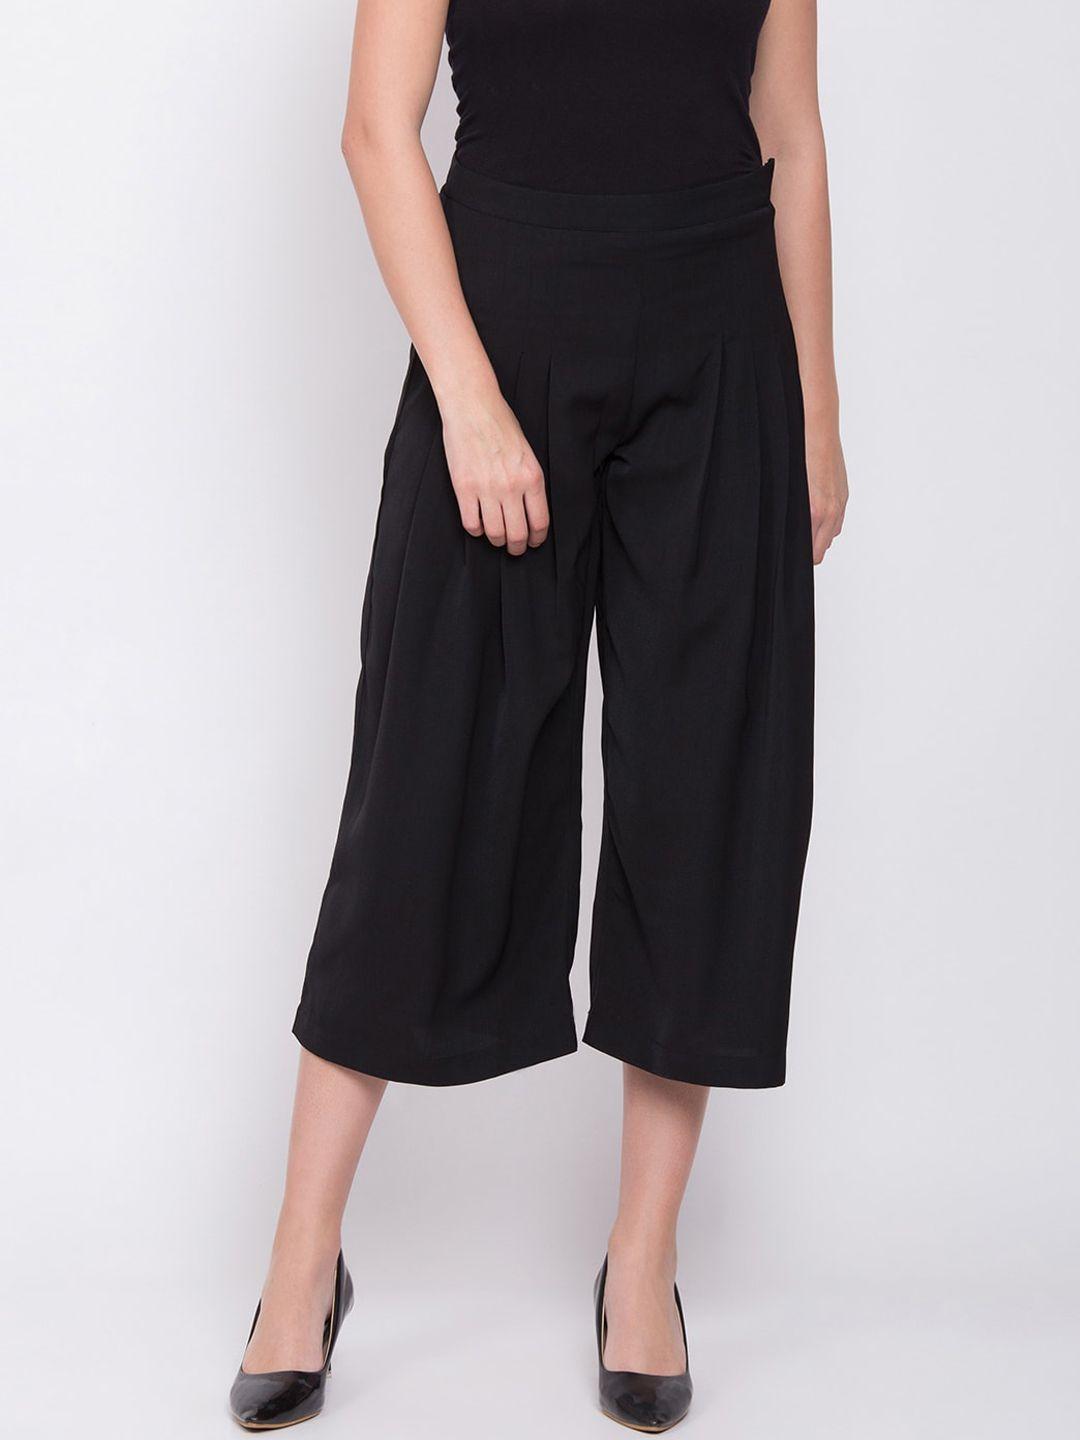 zoella women black pleated culottes trousers